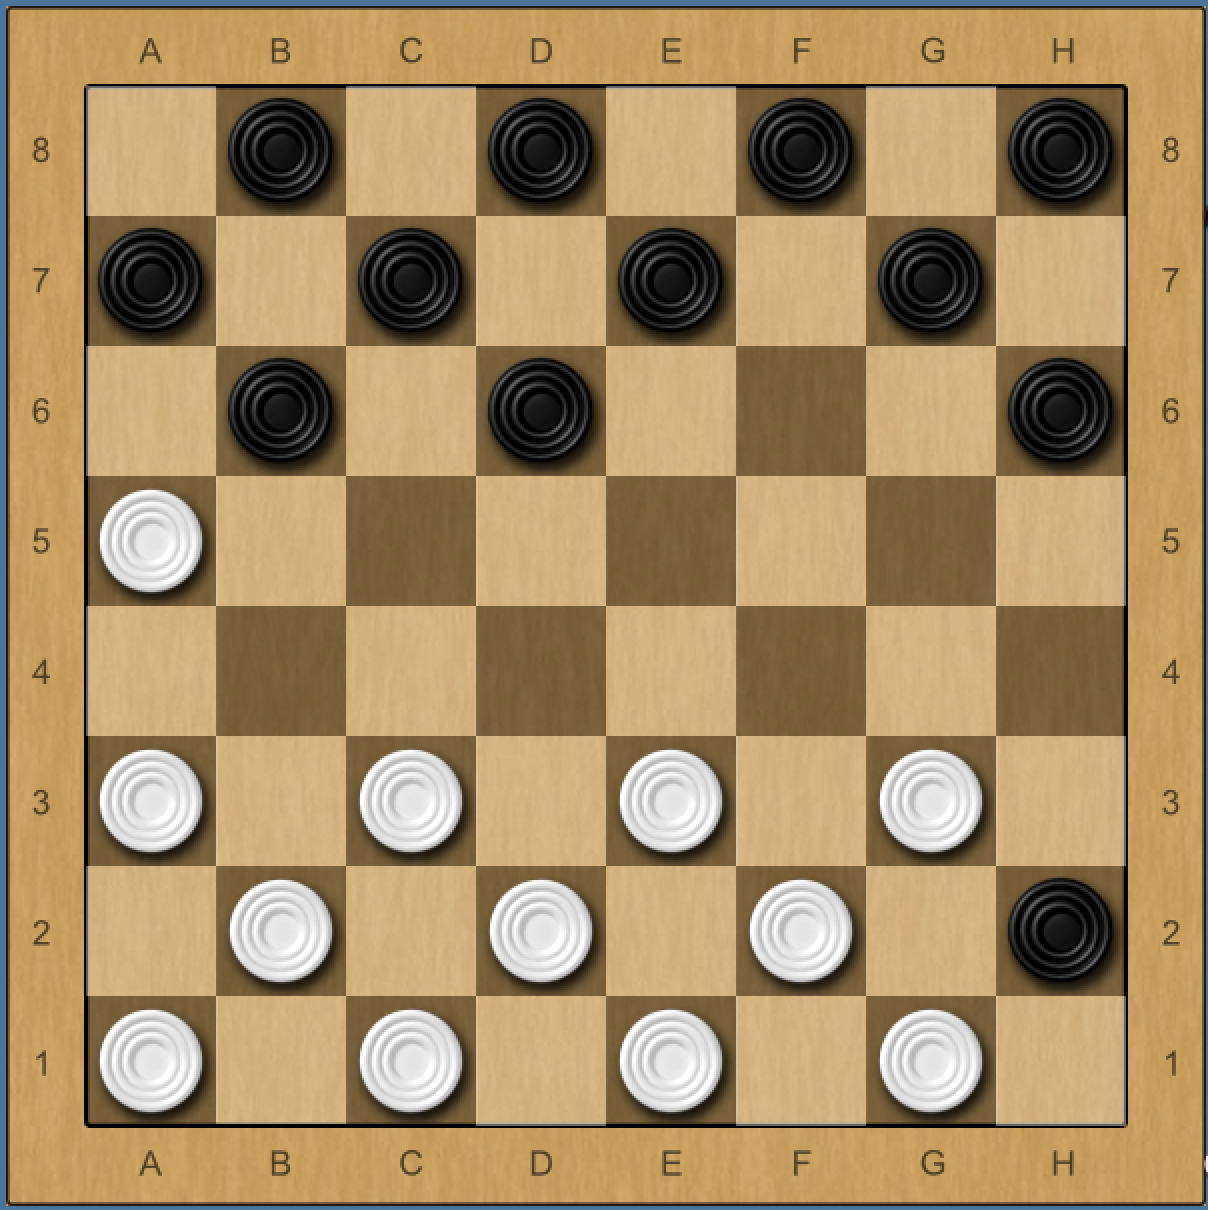 Другая игра в шашки. Русские шашки 8.1.50. Дебют Розенберг шашки. Шашки 2.17.2.